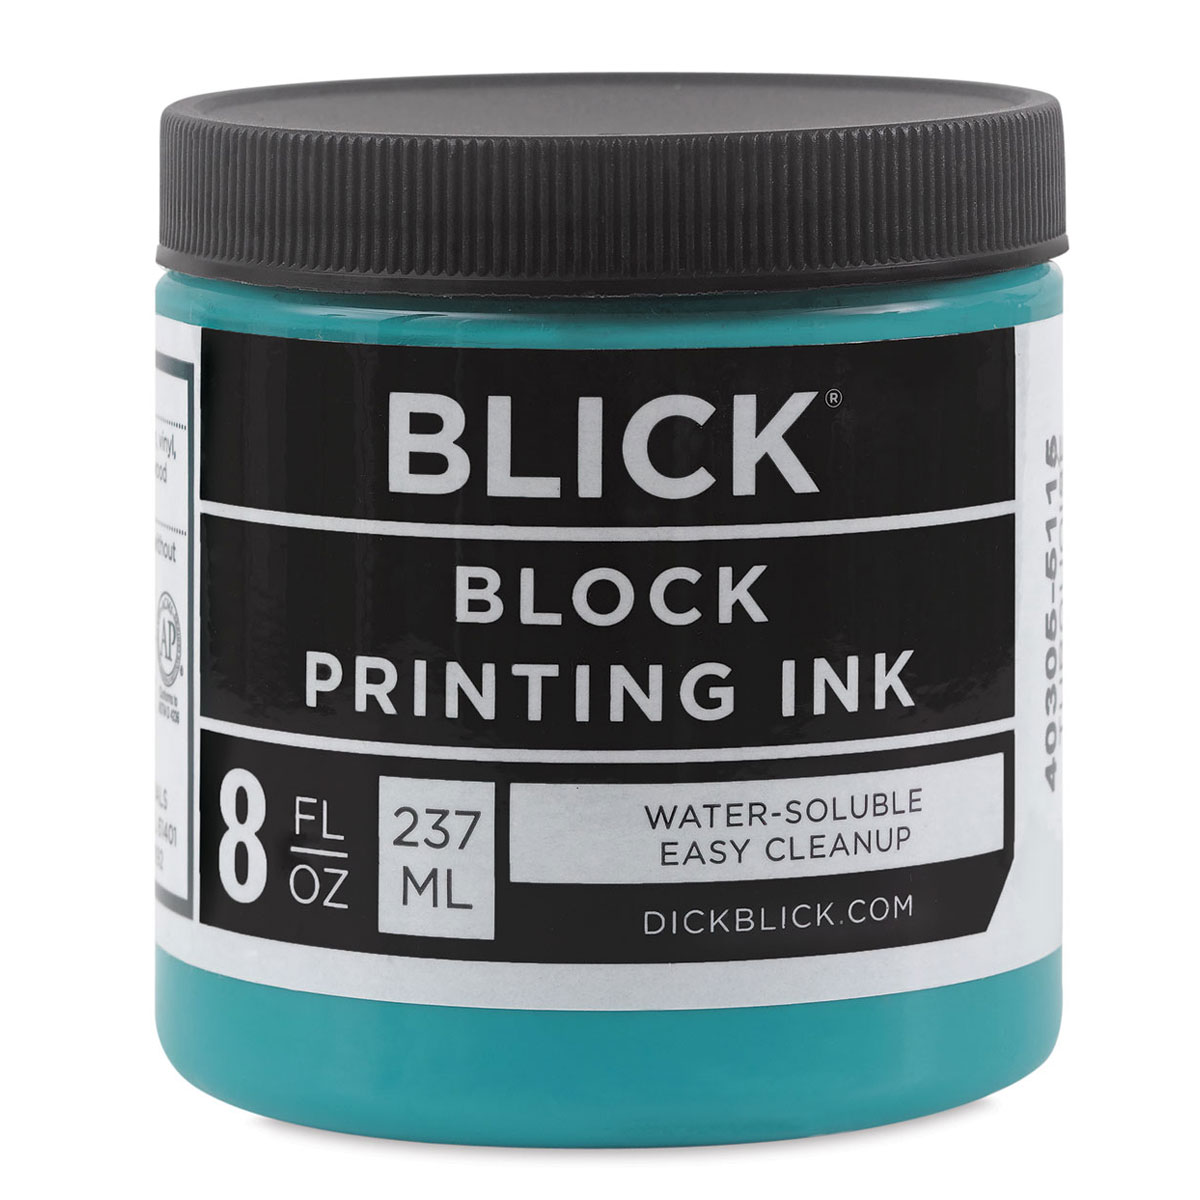 Blick Water-Soluble Block Printing Ink - Turquoise, 8 oz Jar